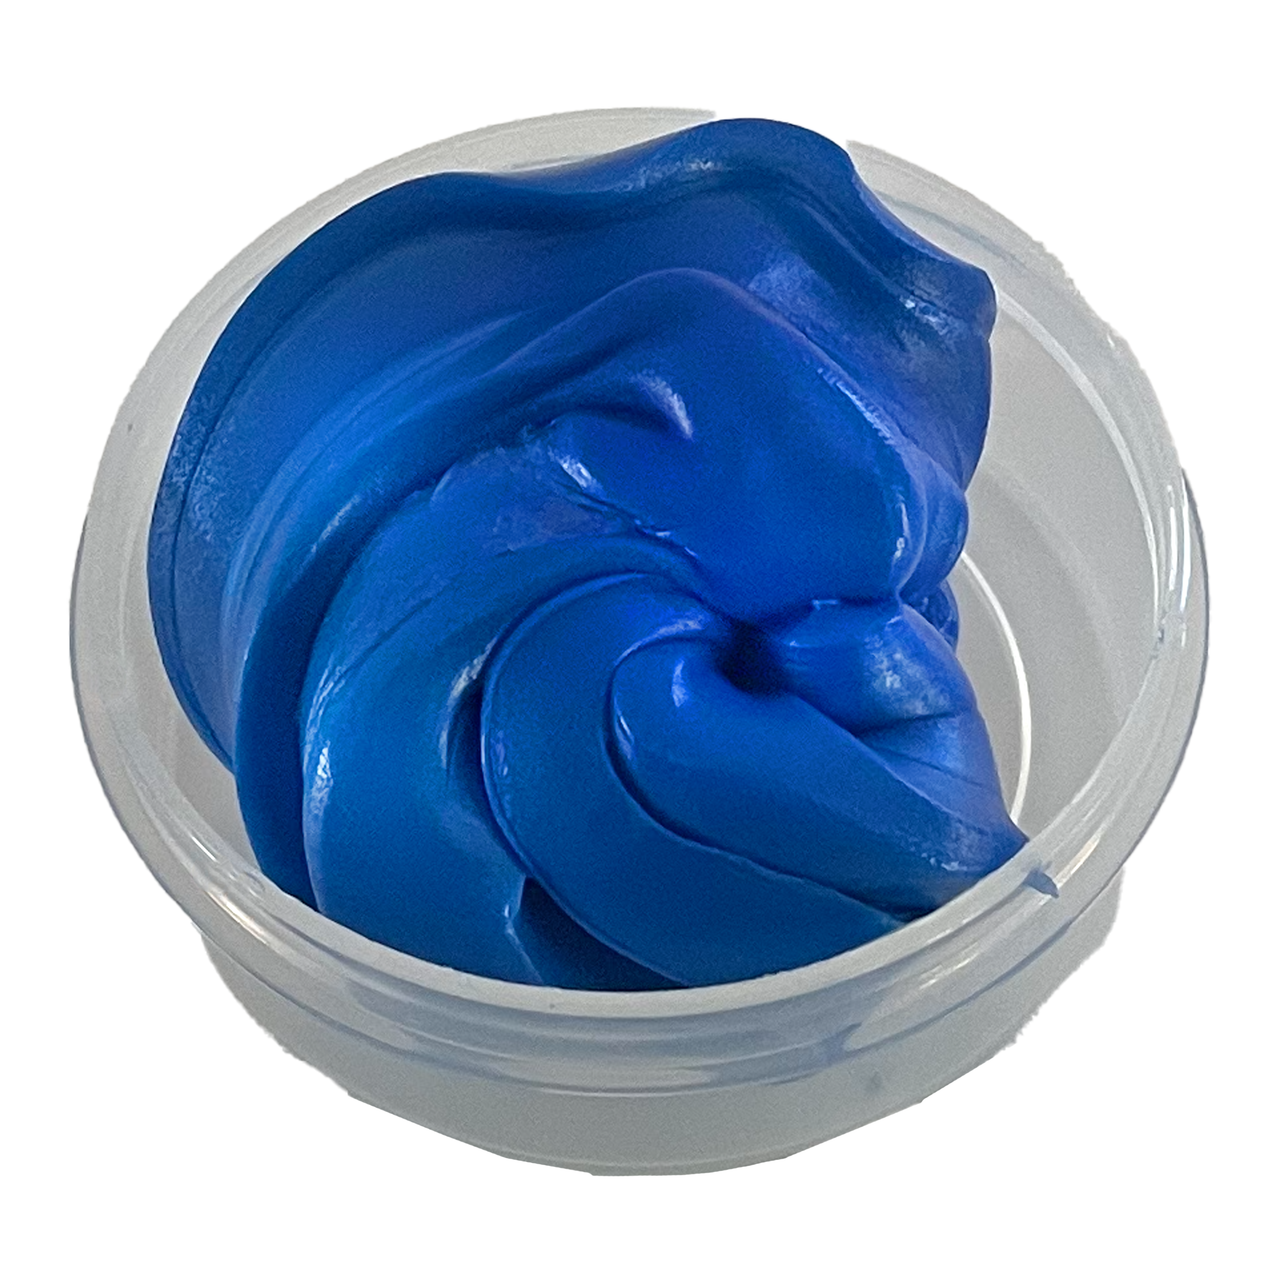 Large Gootonium Iridescent Blue Putty